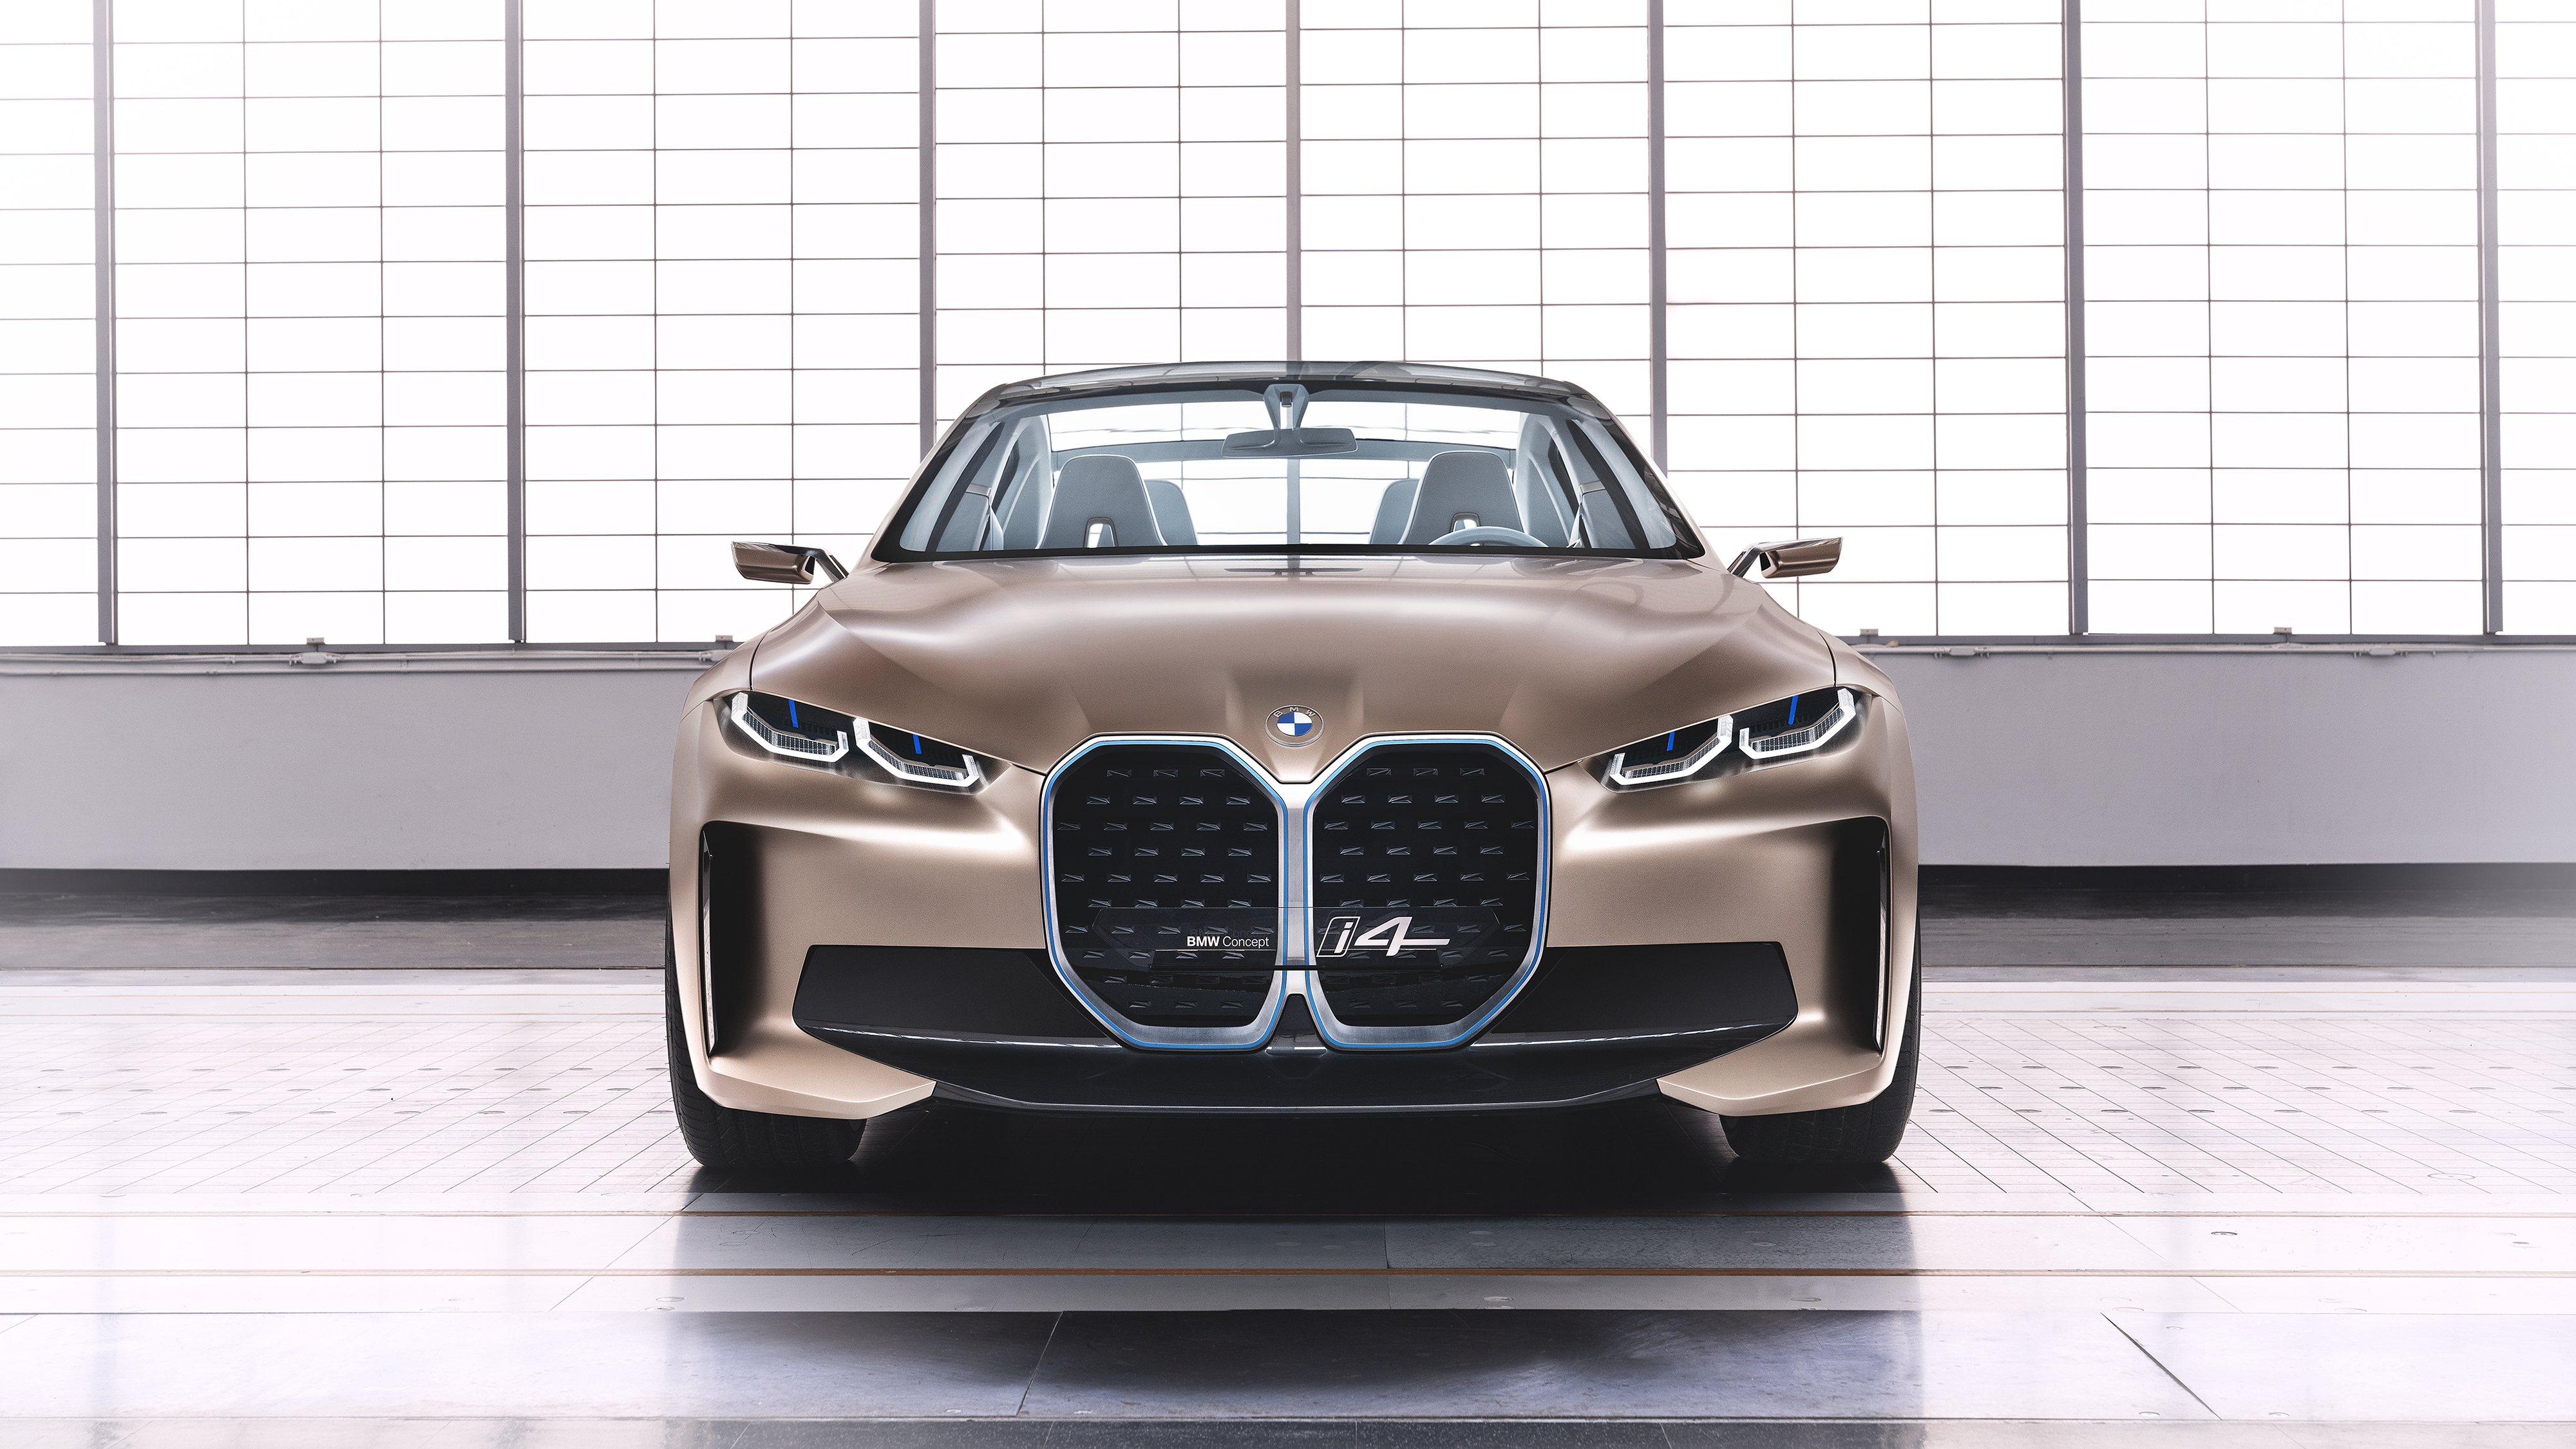 BMW 328 Hommage | Concept Cars | Diseno-Art